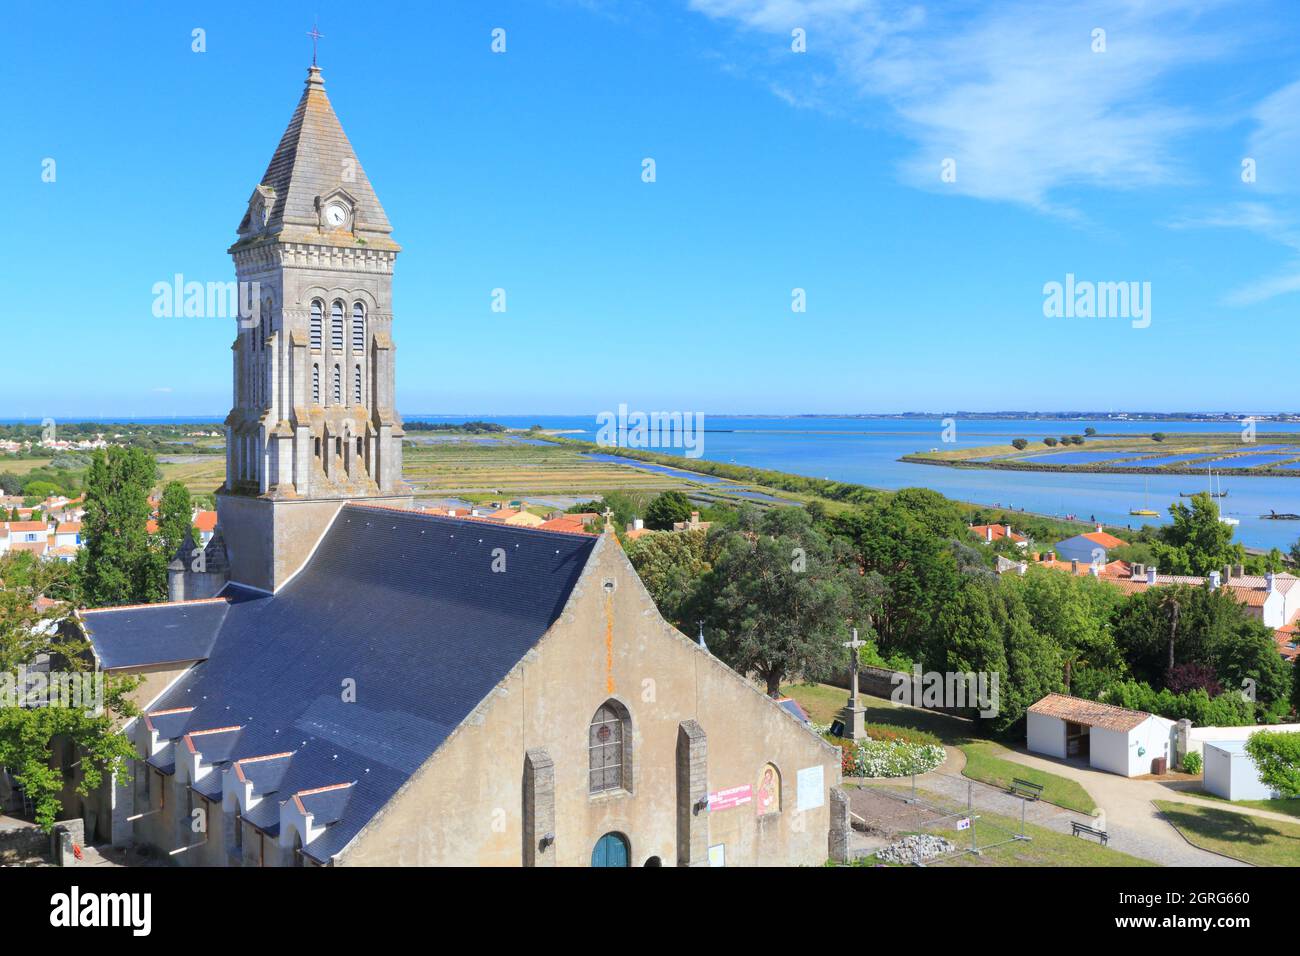 France, Vendee, Noirmoutier island, Noirmoutier en l'ile, Saint Philbert church and salt marshes in the background Stock Photo